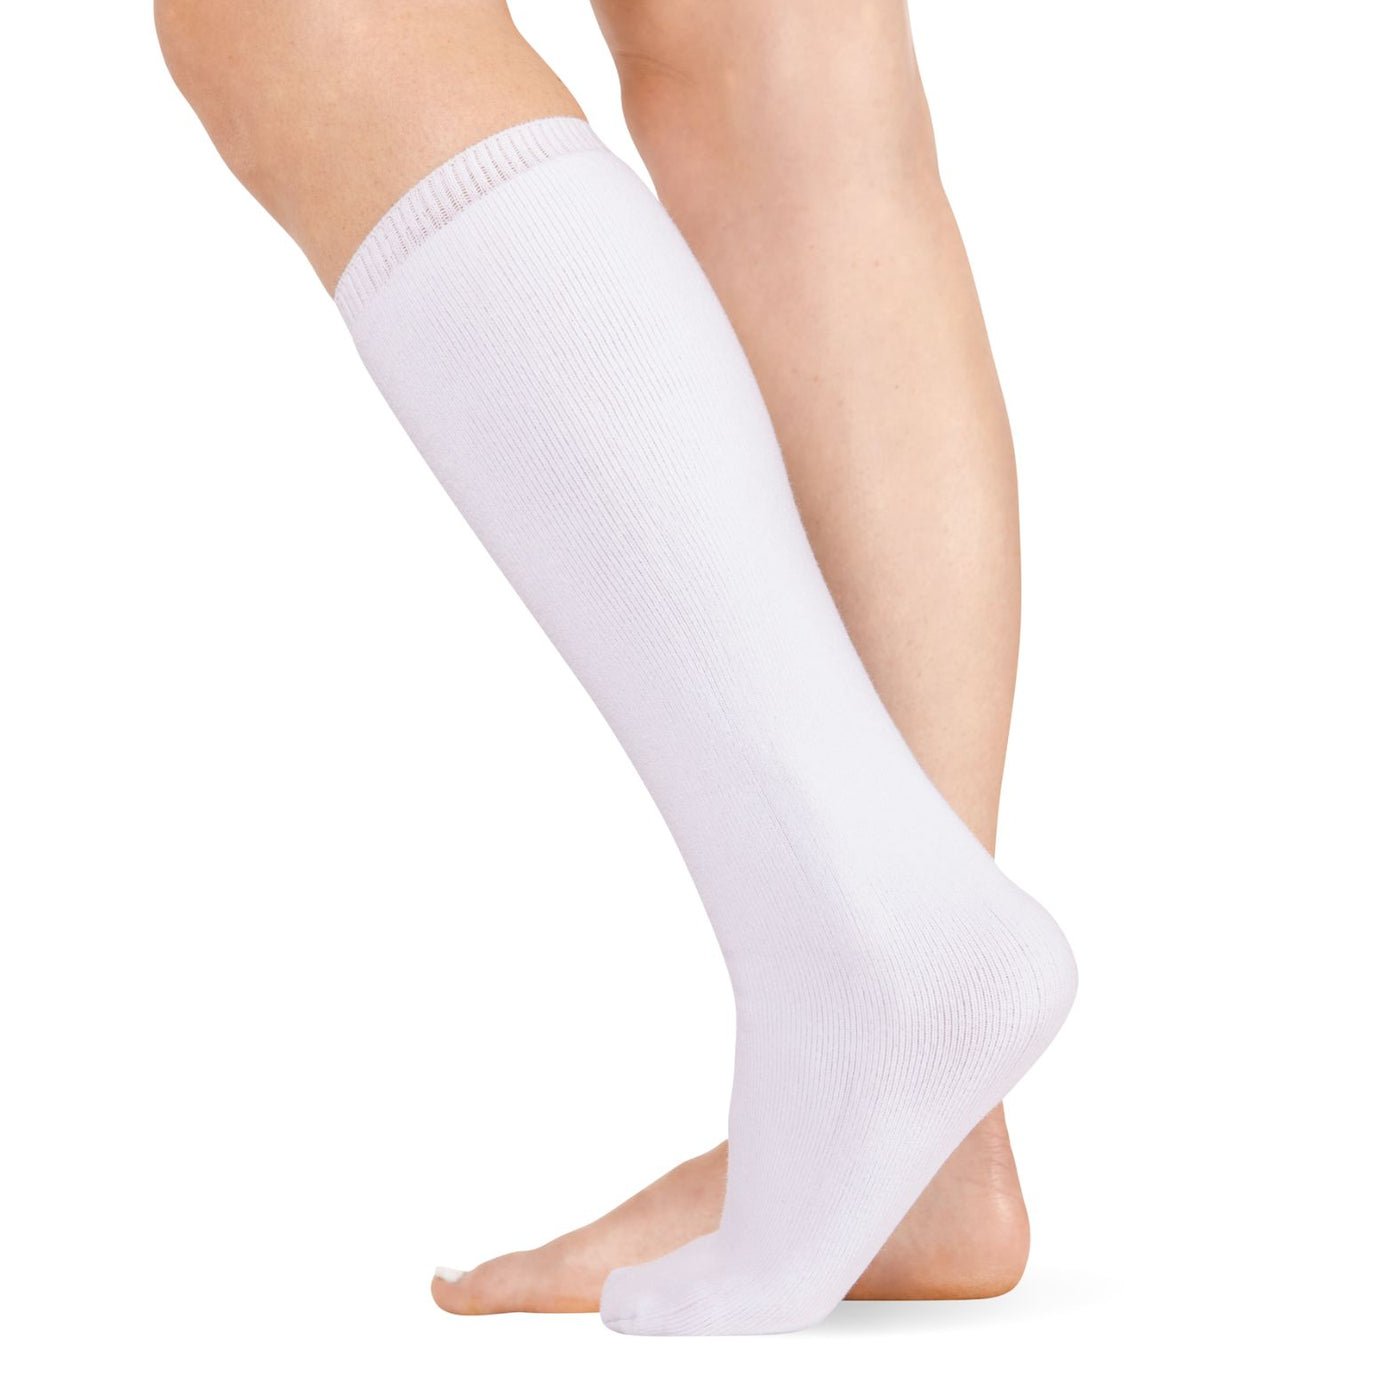  LORVVDE Walking Boot Socks Replacement Sock Liner for  Orthopedic Boot Walker Brace, Cast Socks for Fracture Boot Surgical leg  Cover Black 2 Pairs : Health & Household